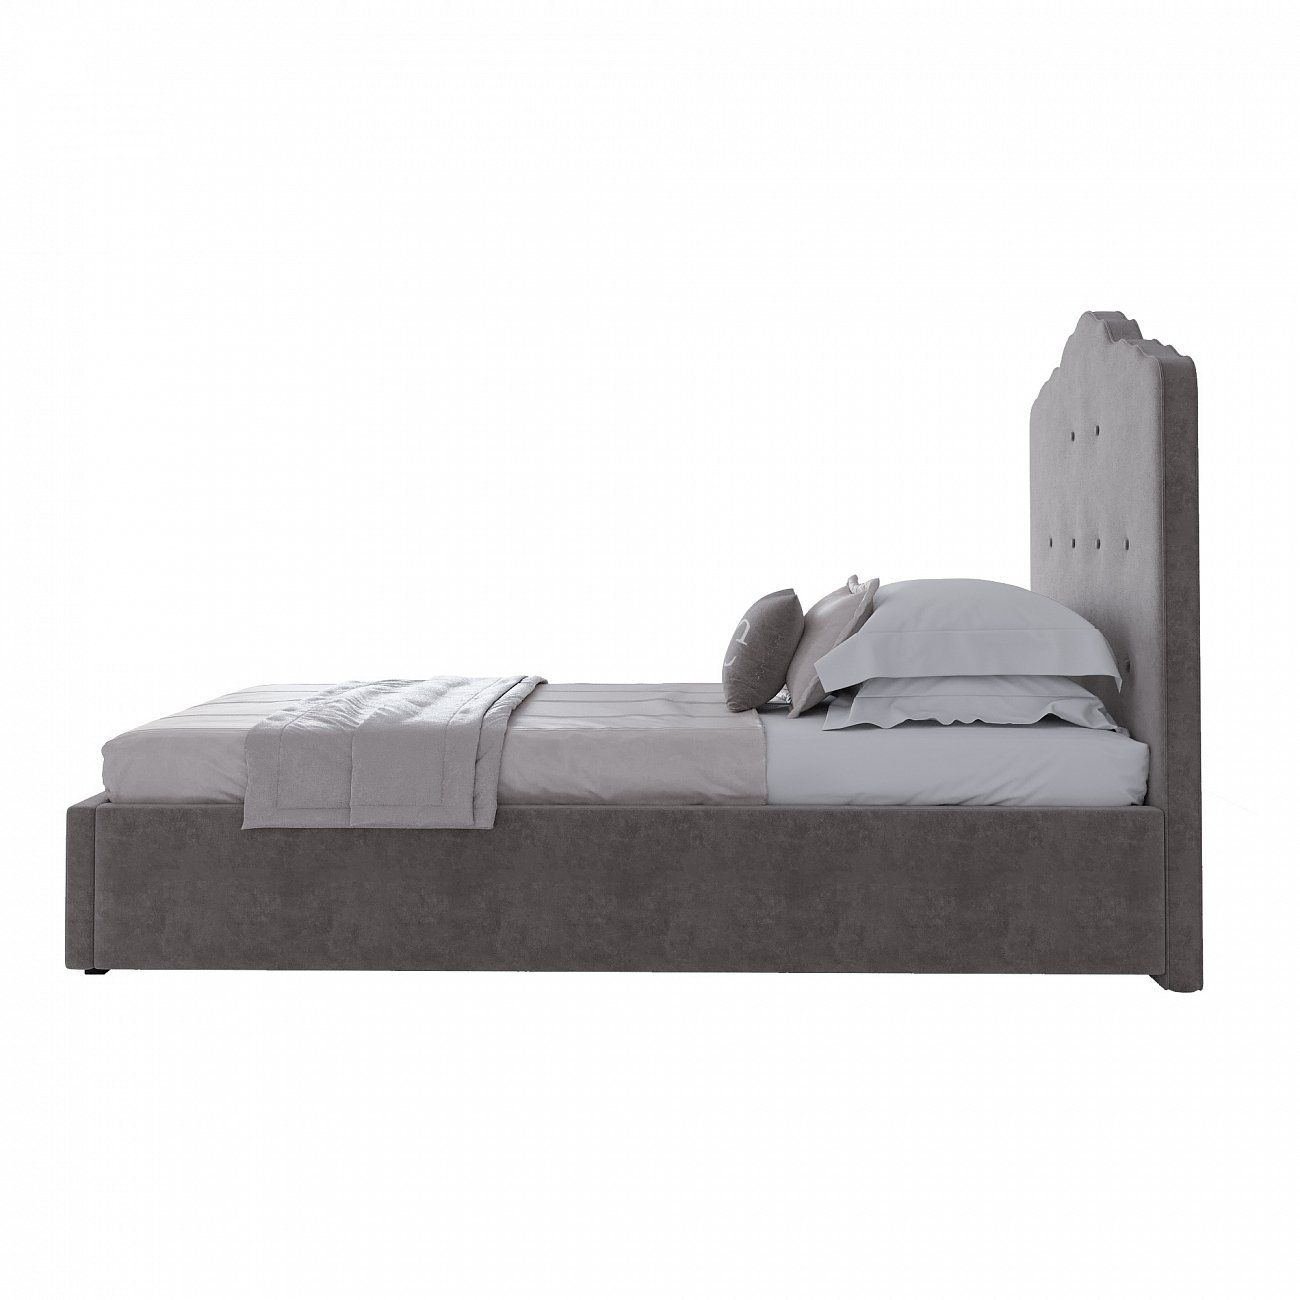 Single bed 90x200 Palace velour grey-beige P